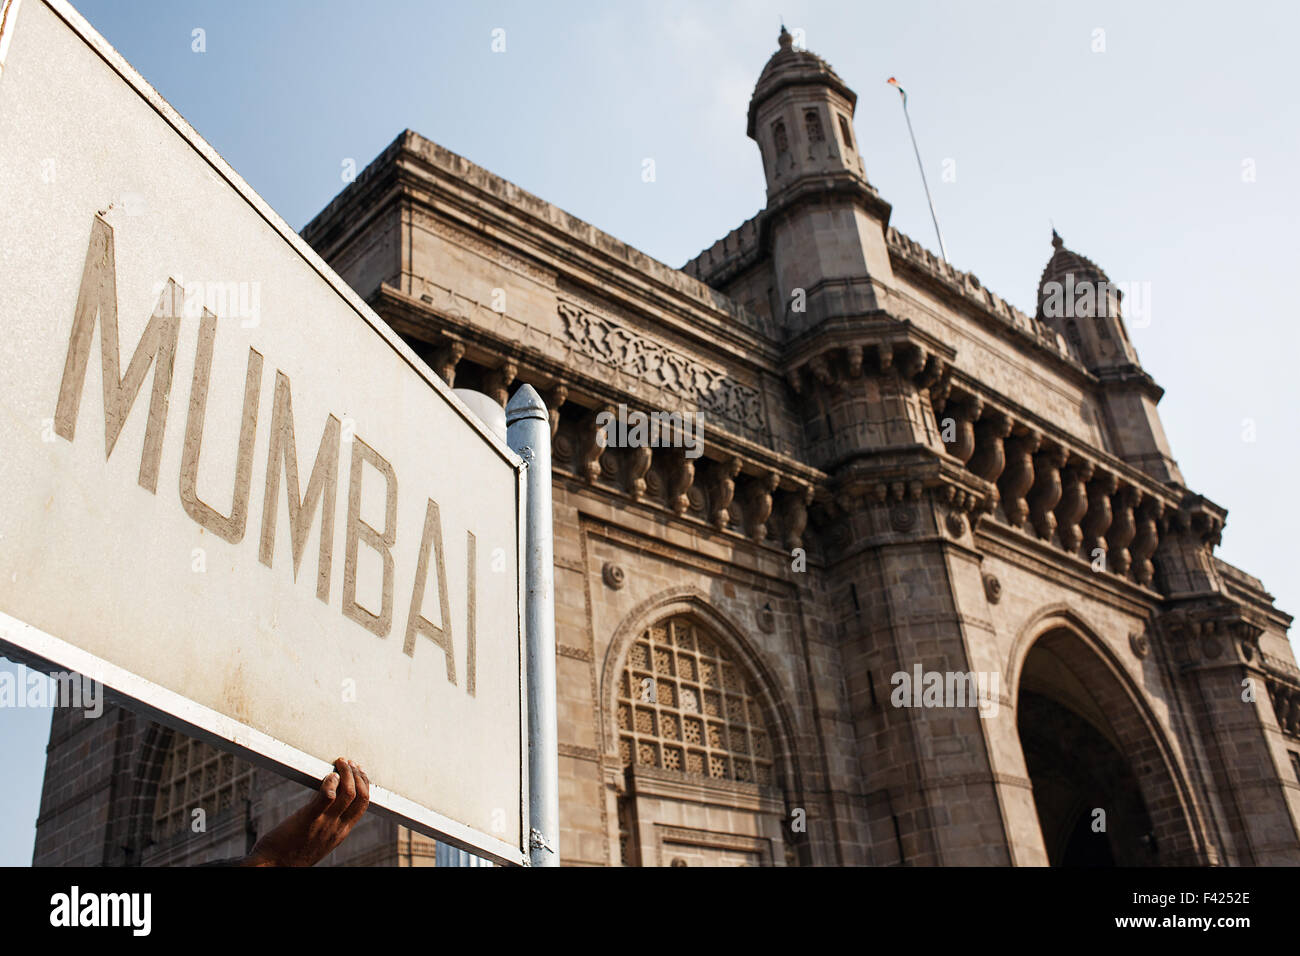 The Gateway of India in Mumbai, India Stock Photo